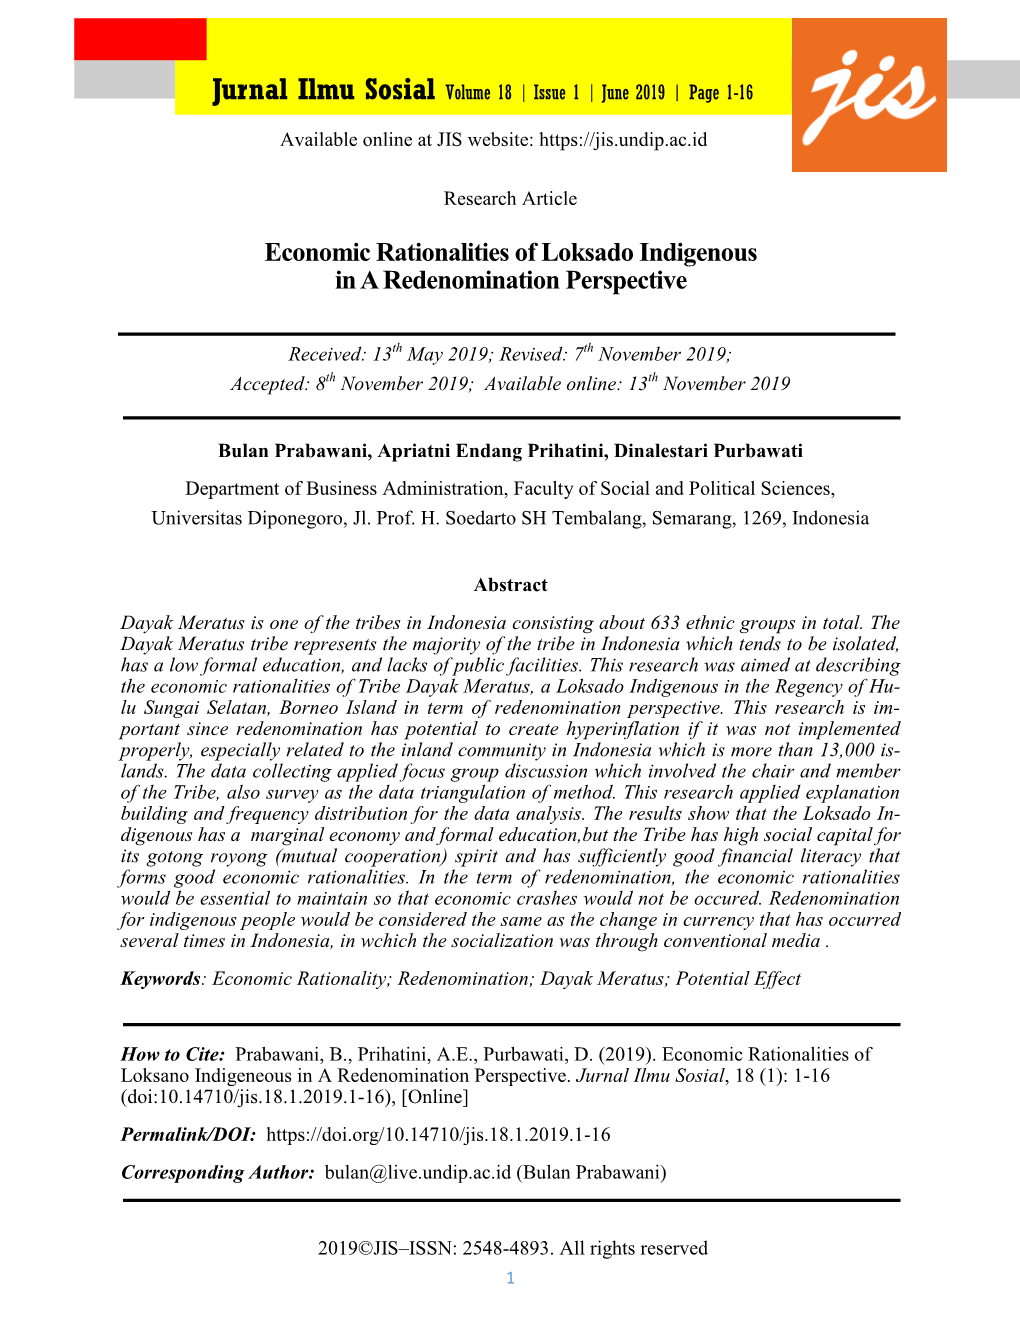 Economic Rationalities of Loksado Indigenous in a Redenomination Perspective